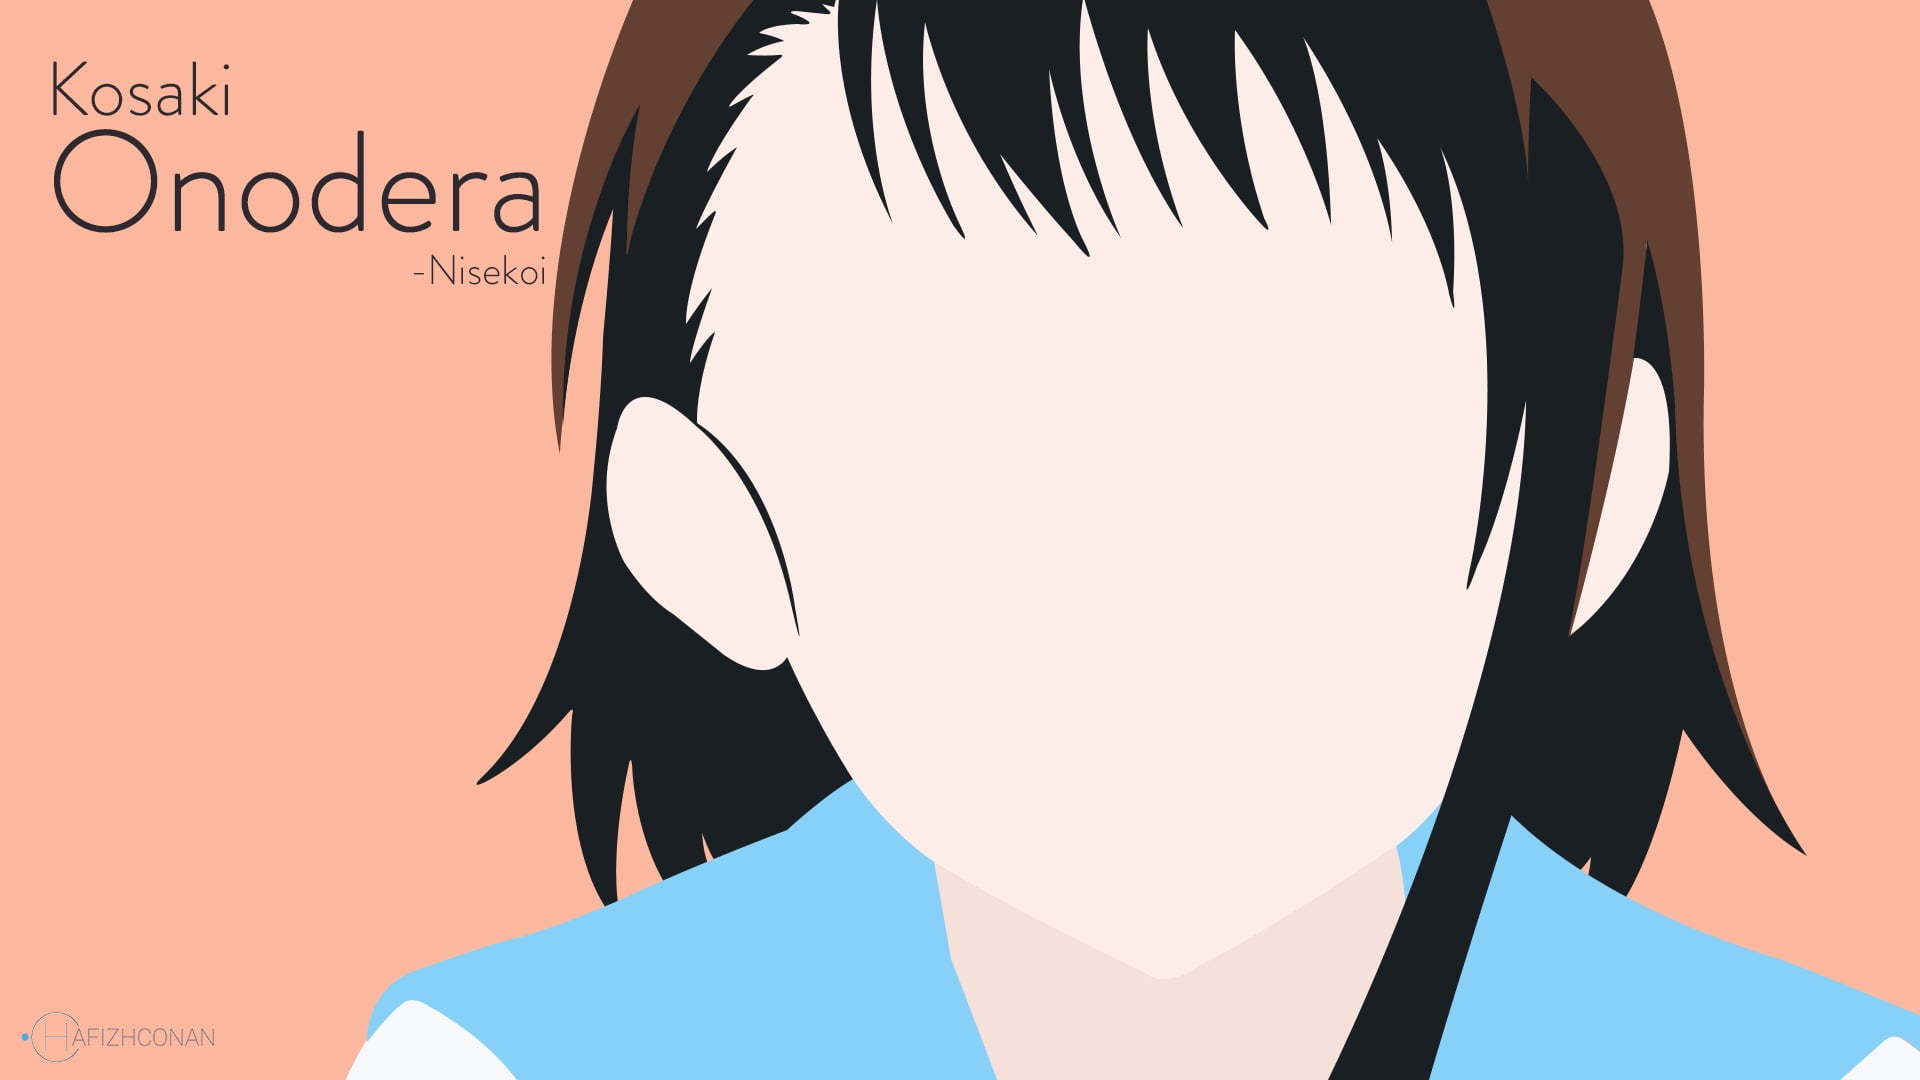 Nisekoi, Onodera Kosaki, anime girls, text, communication, silhouette